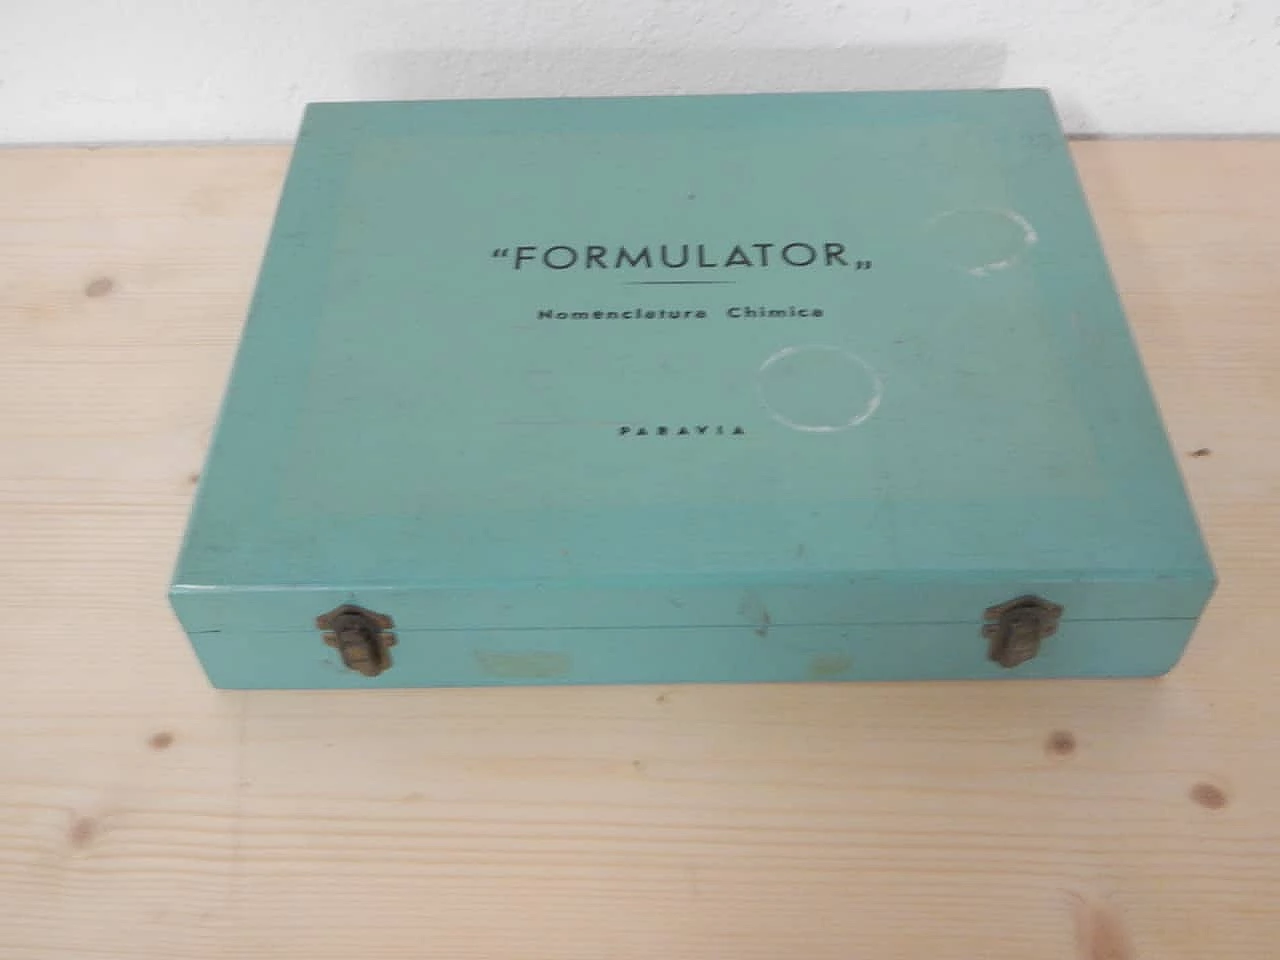 Formulator chemical nomenclature box for Paravia, 1948 1